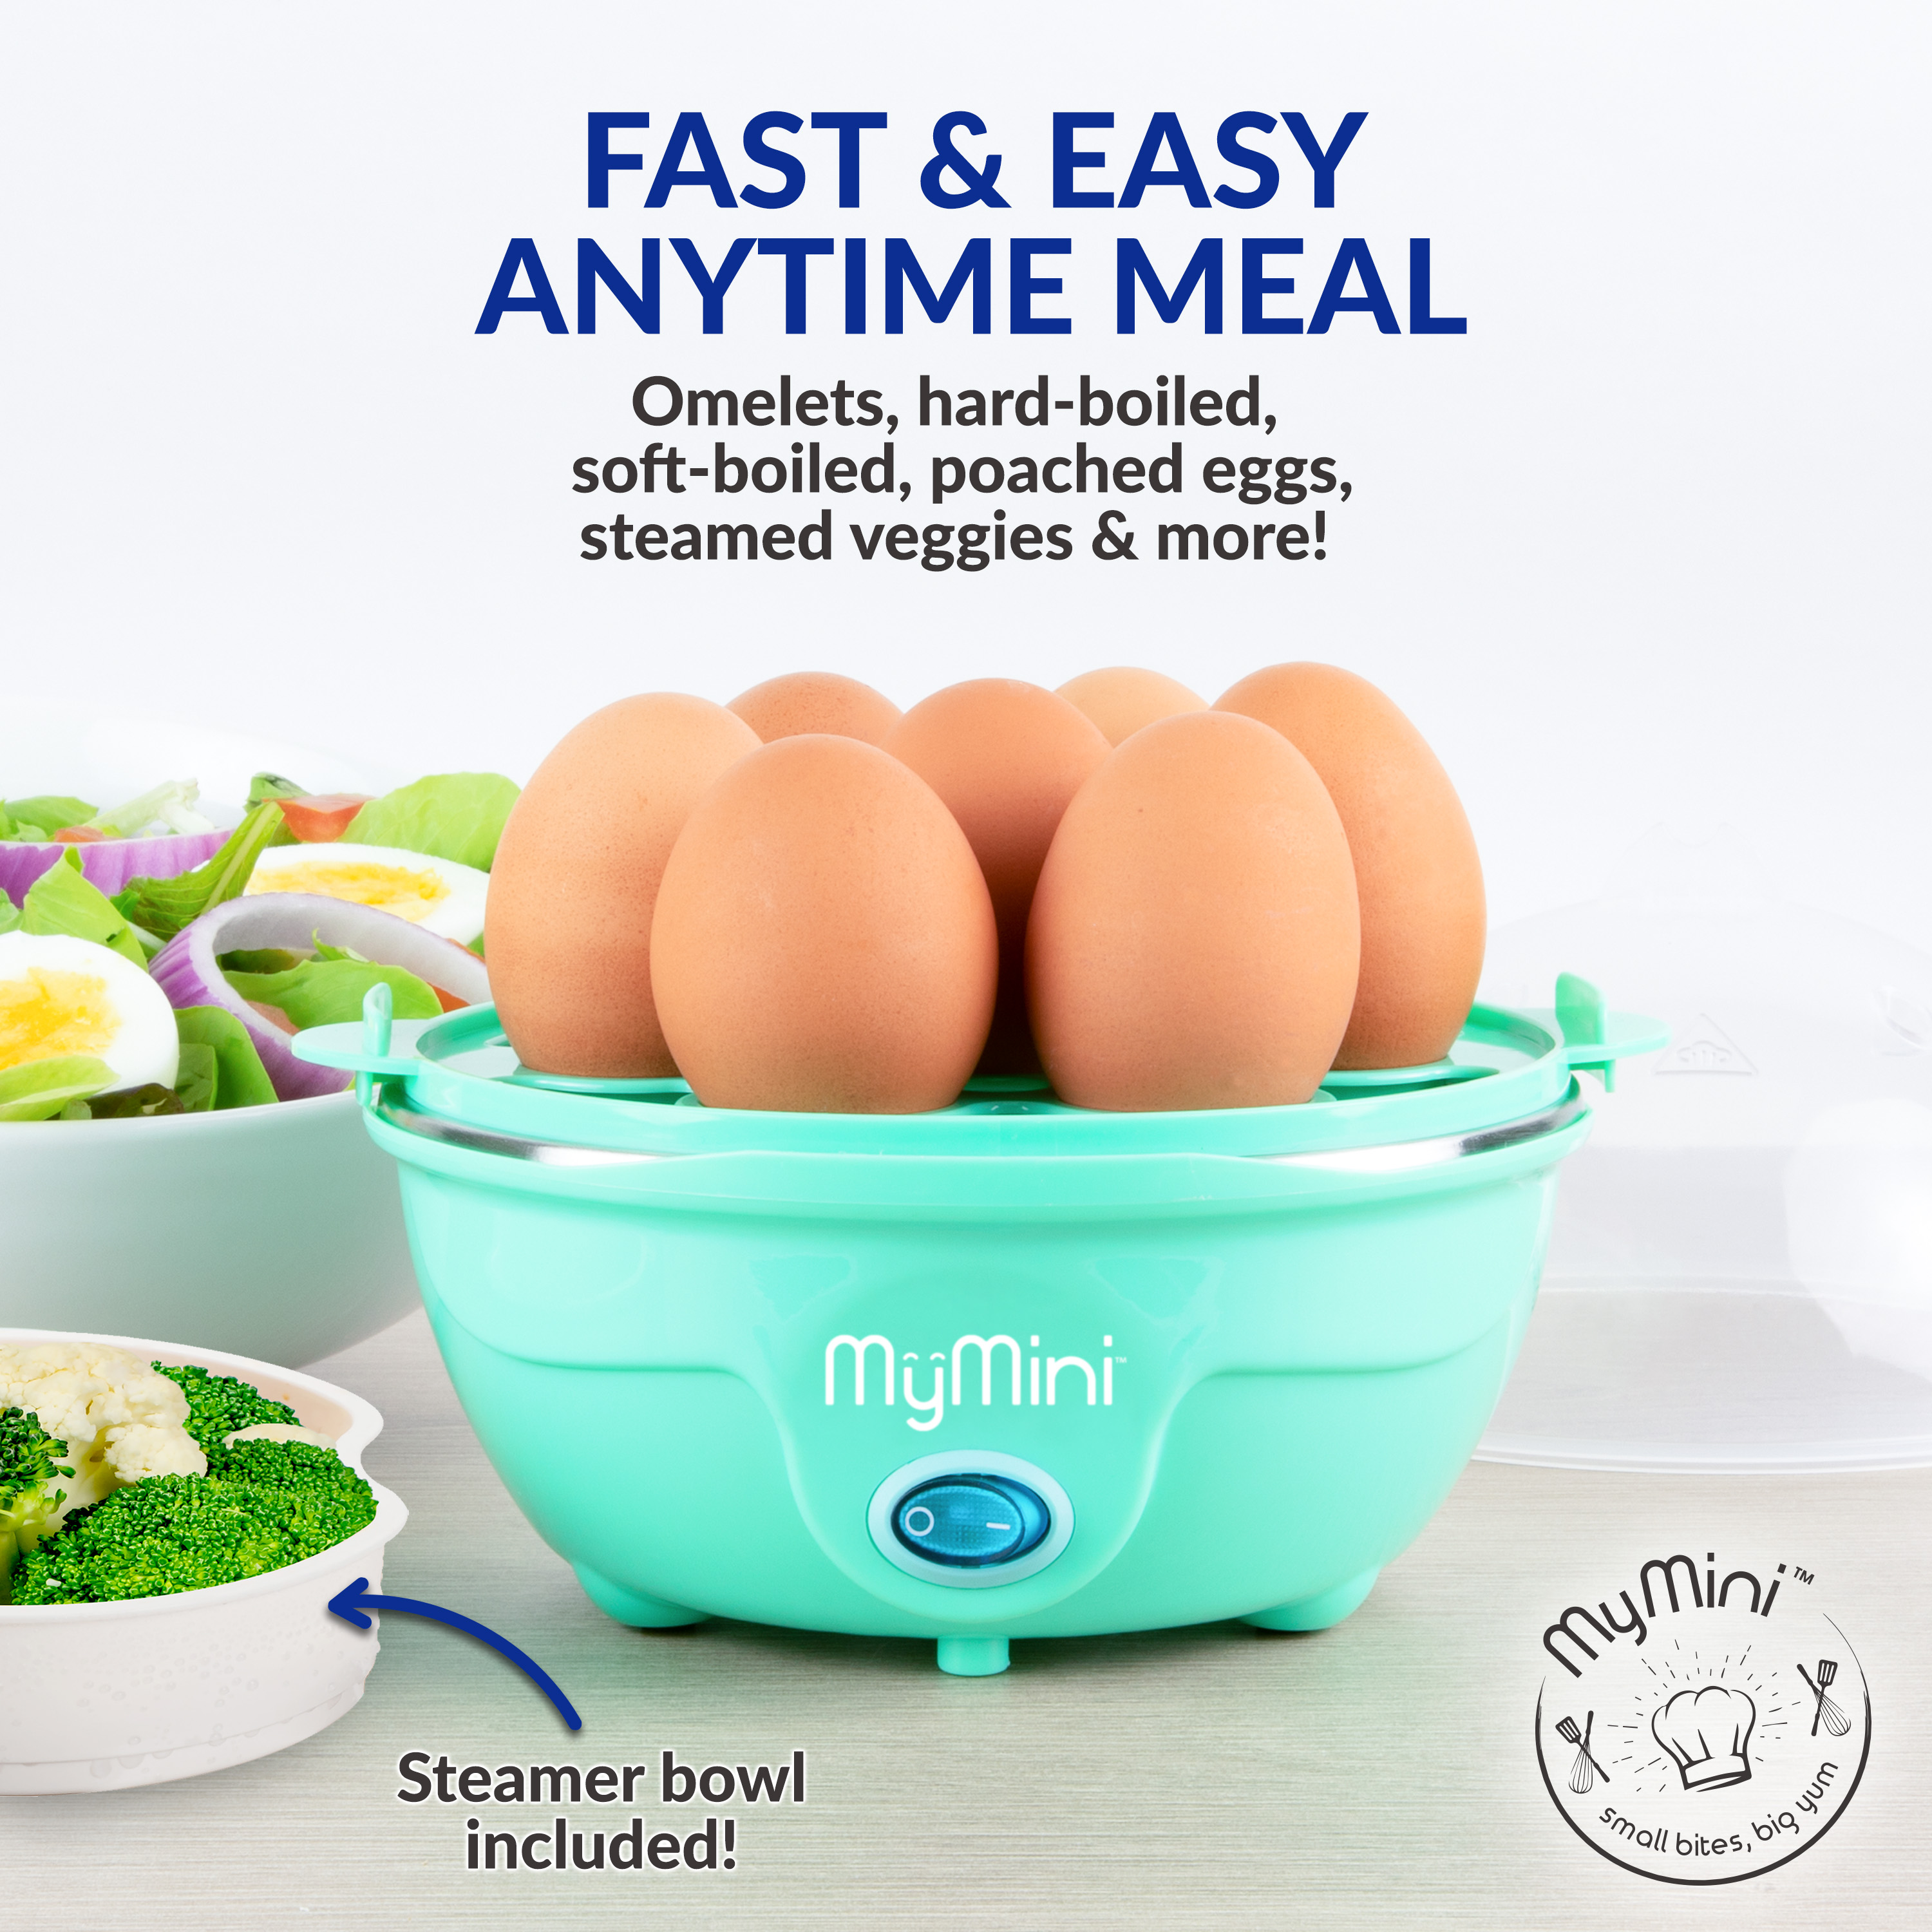 MyMini Premium 7-Egg Cooker, Teal - image 3 of 12